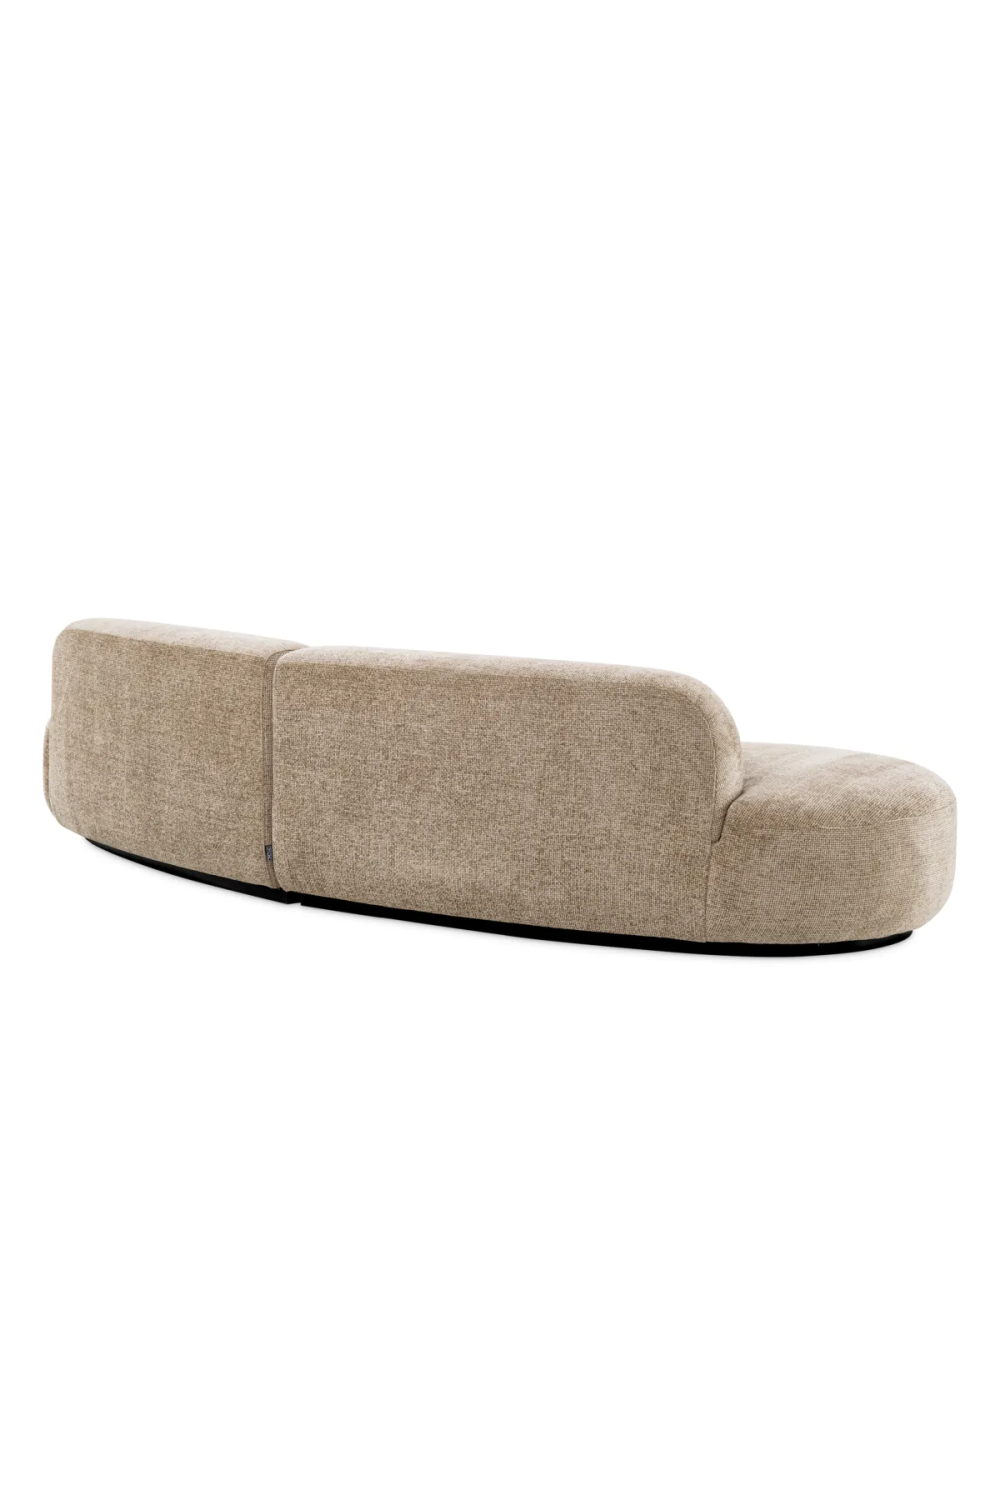 Beige Curved Modern Sofa | Eichholtz Björn | Oroa.com